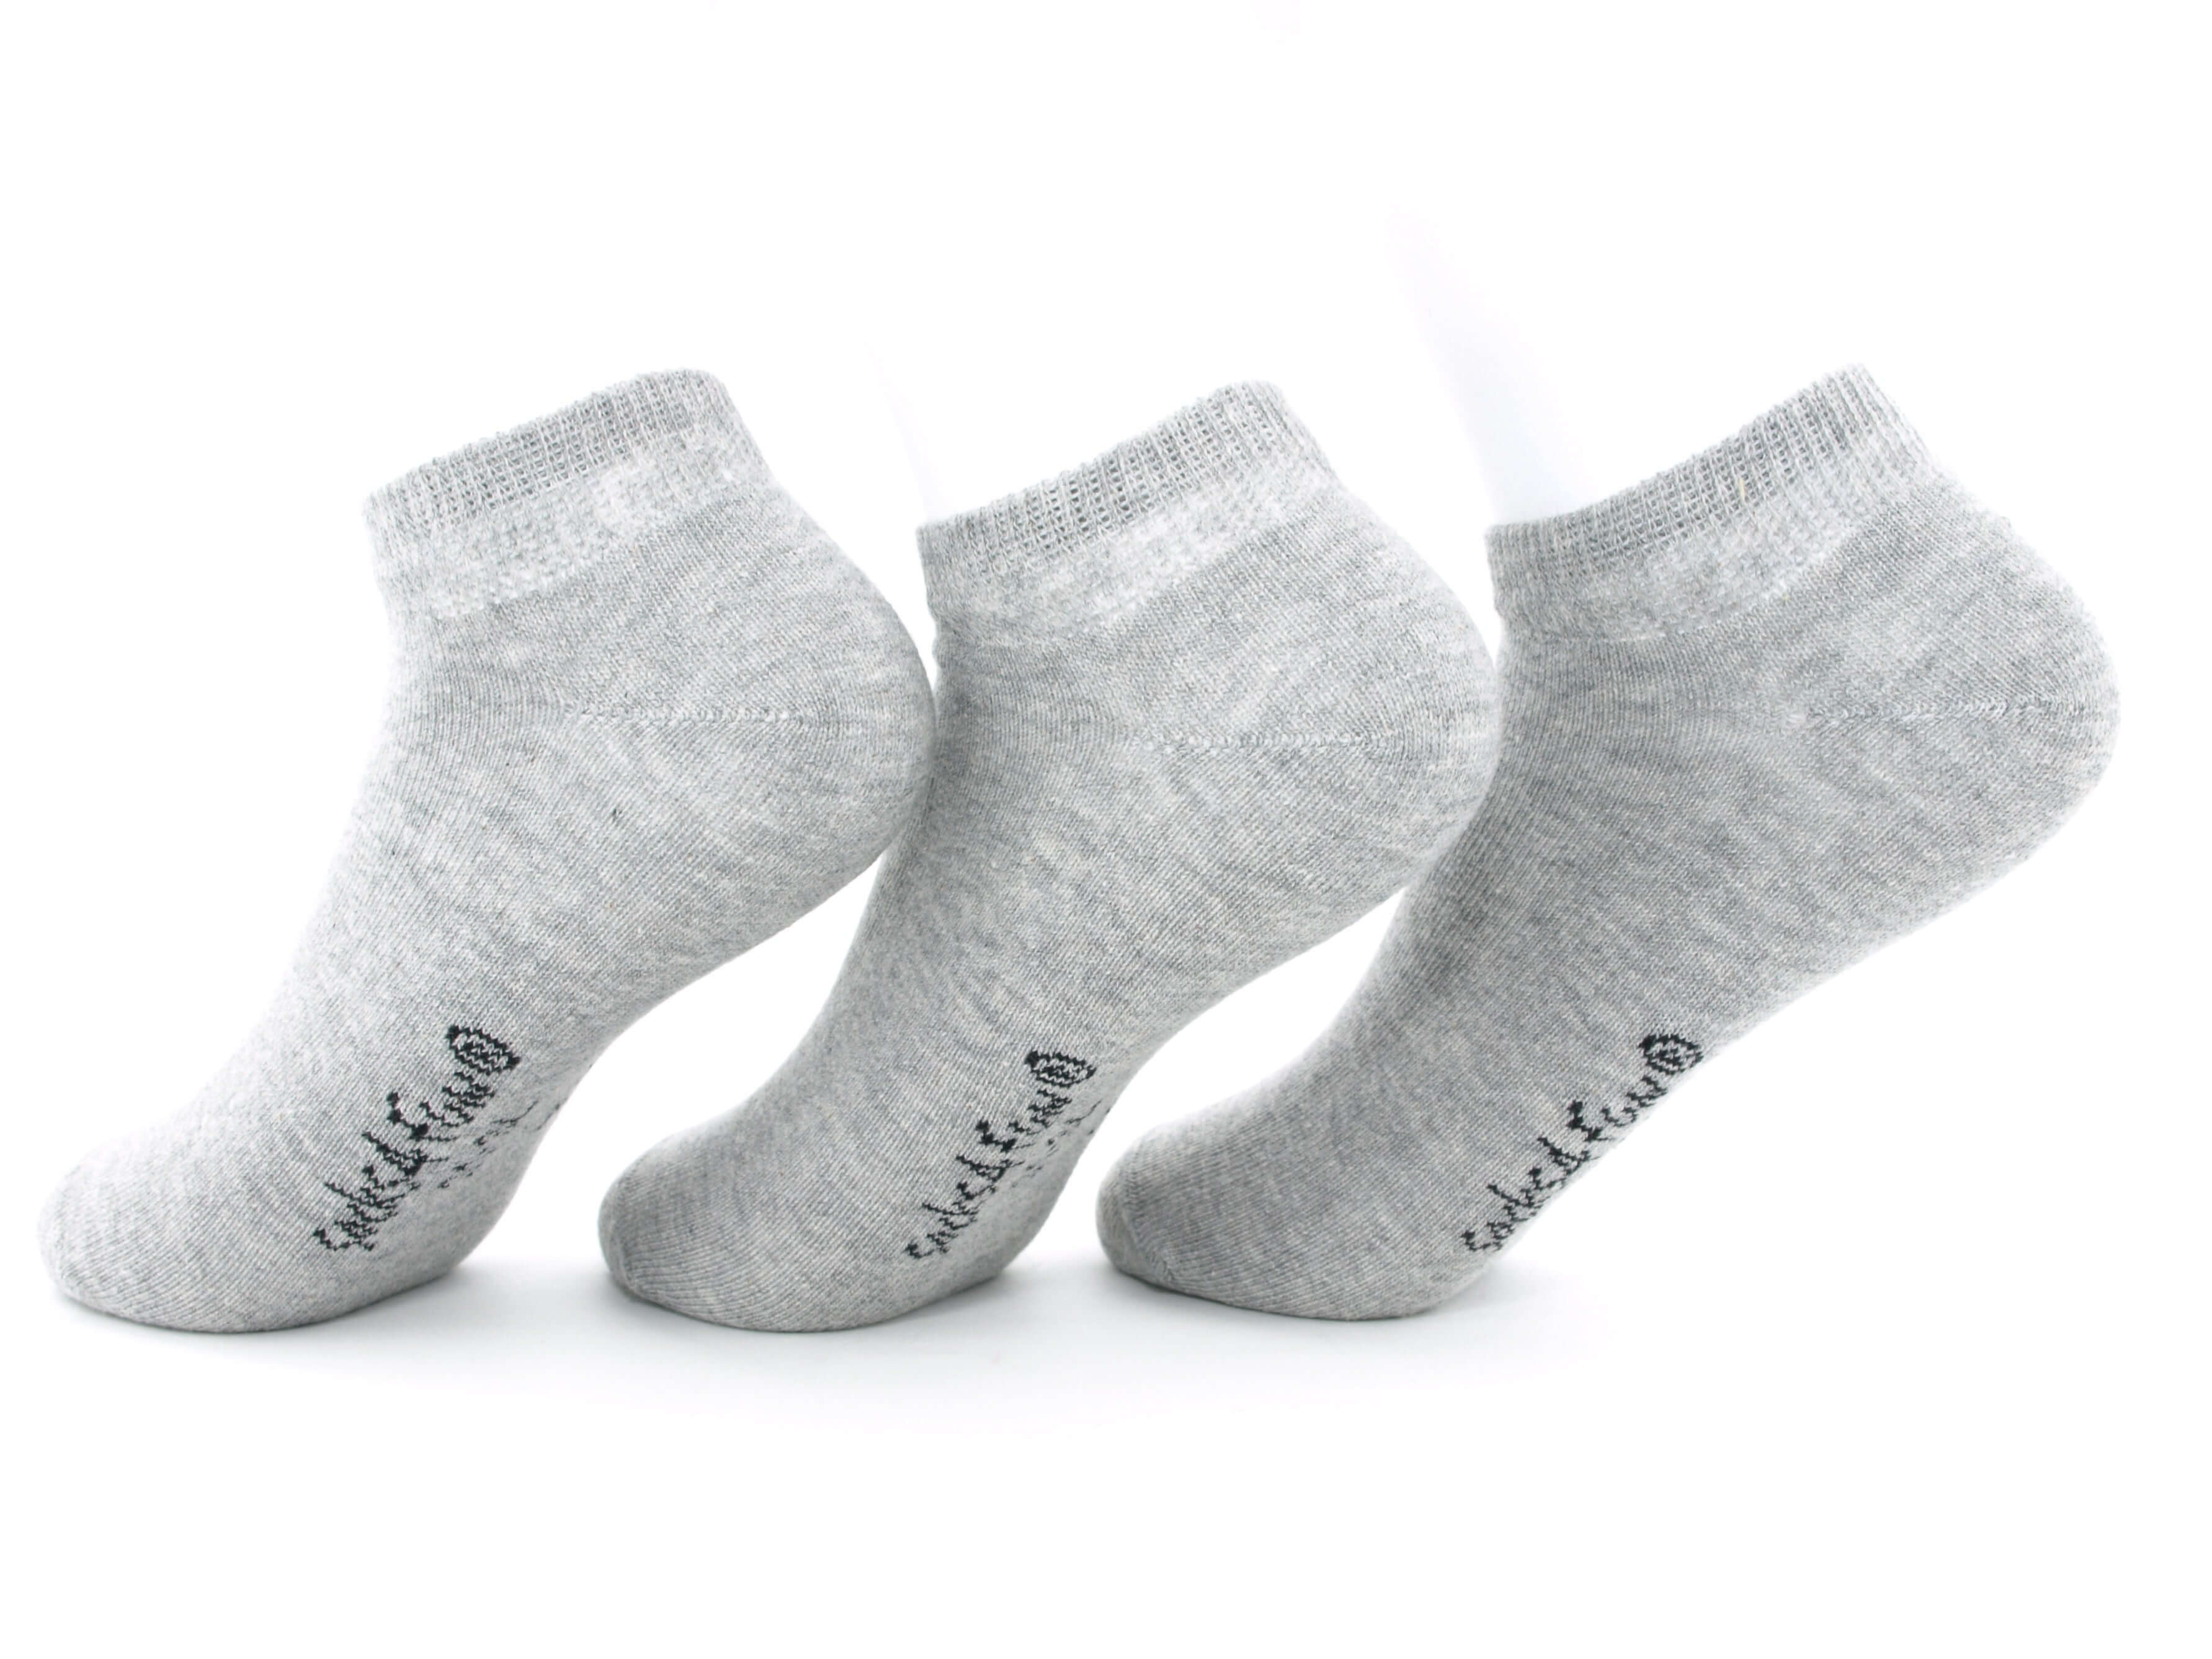 Bild: Sneaker Socken Kinder grau 2